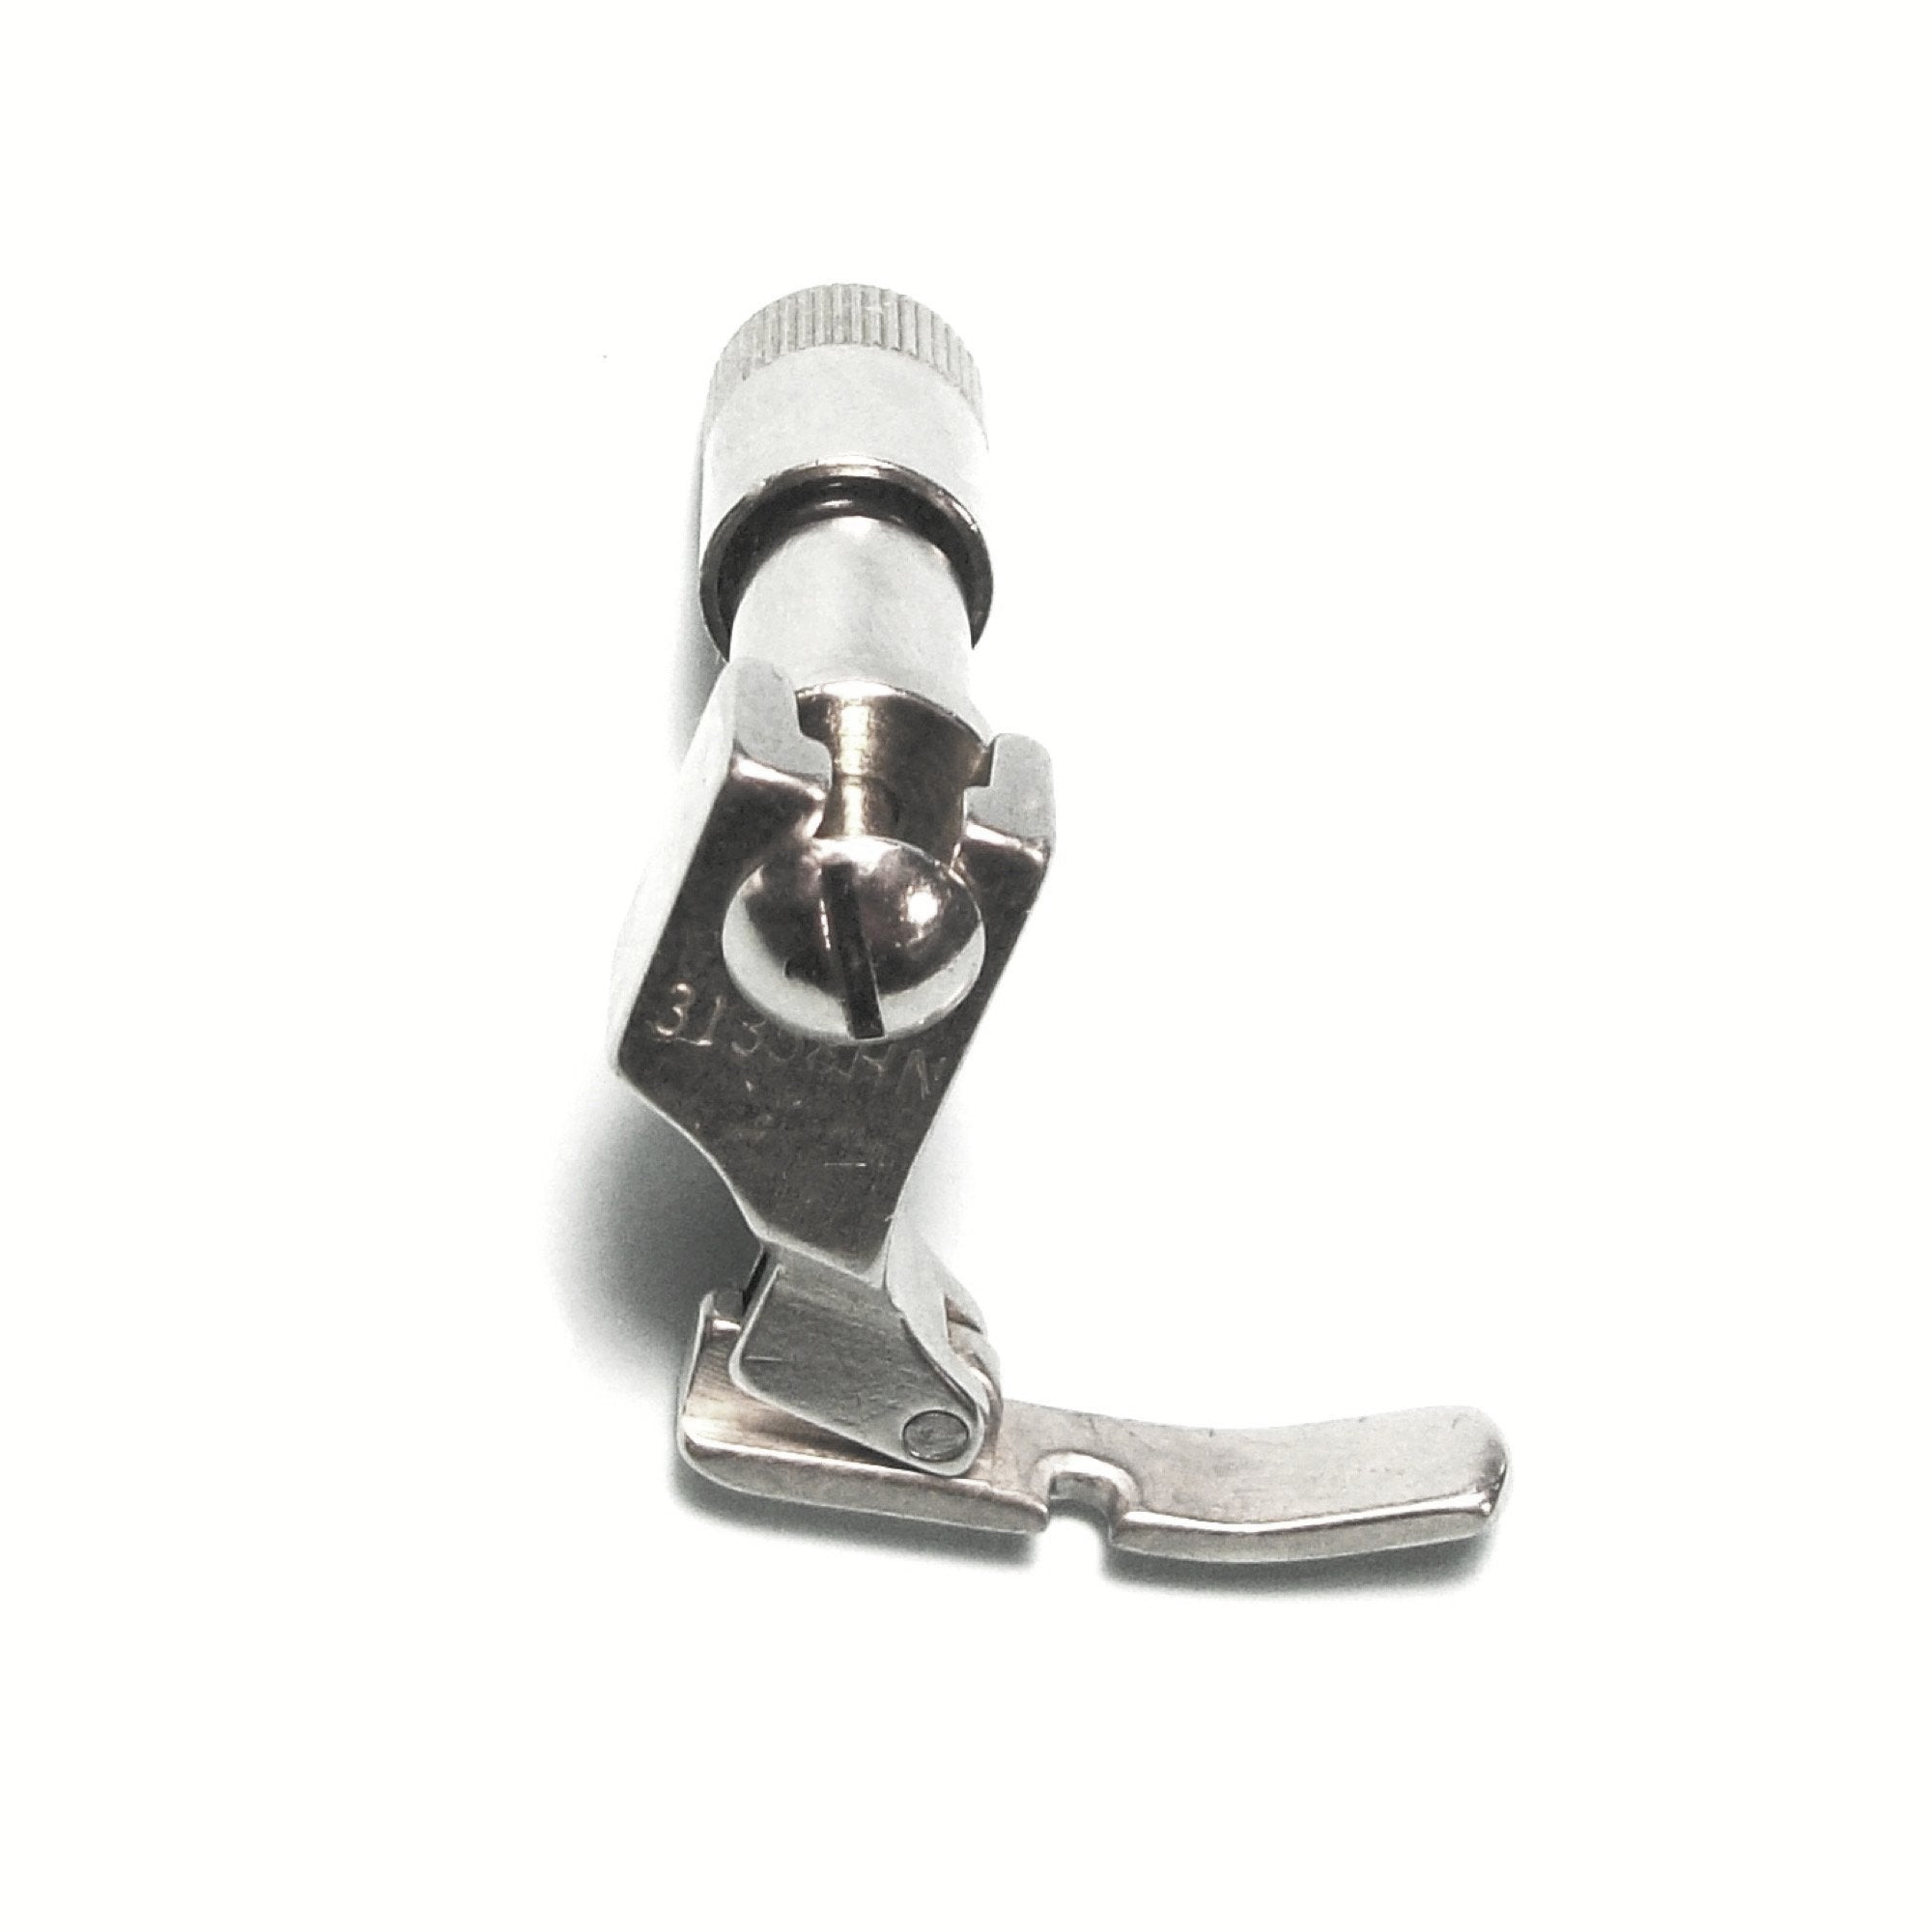 Adjustable Zipper Foot for Singer Sewing Machine